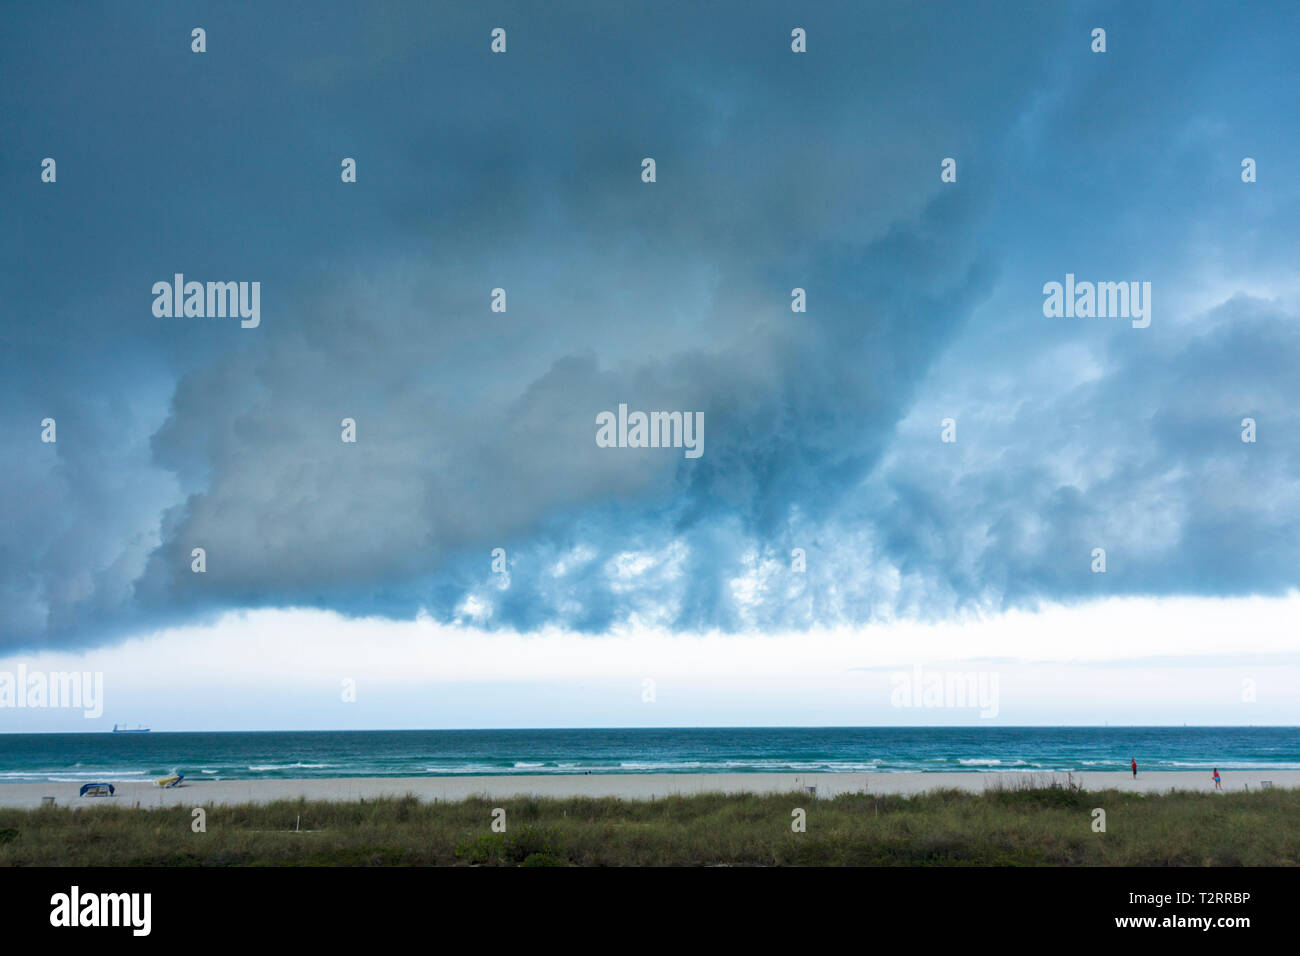 Miami Beach Florida,Atlantic Ocean,water,cold front,weather,storm,stormy,gray,clouds,cloudy,menacing,ominous,dark sky,FL090417029 Stock Photo